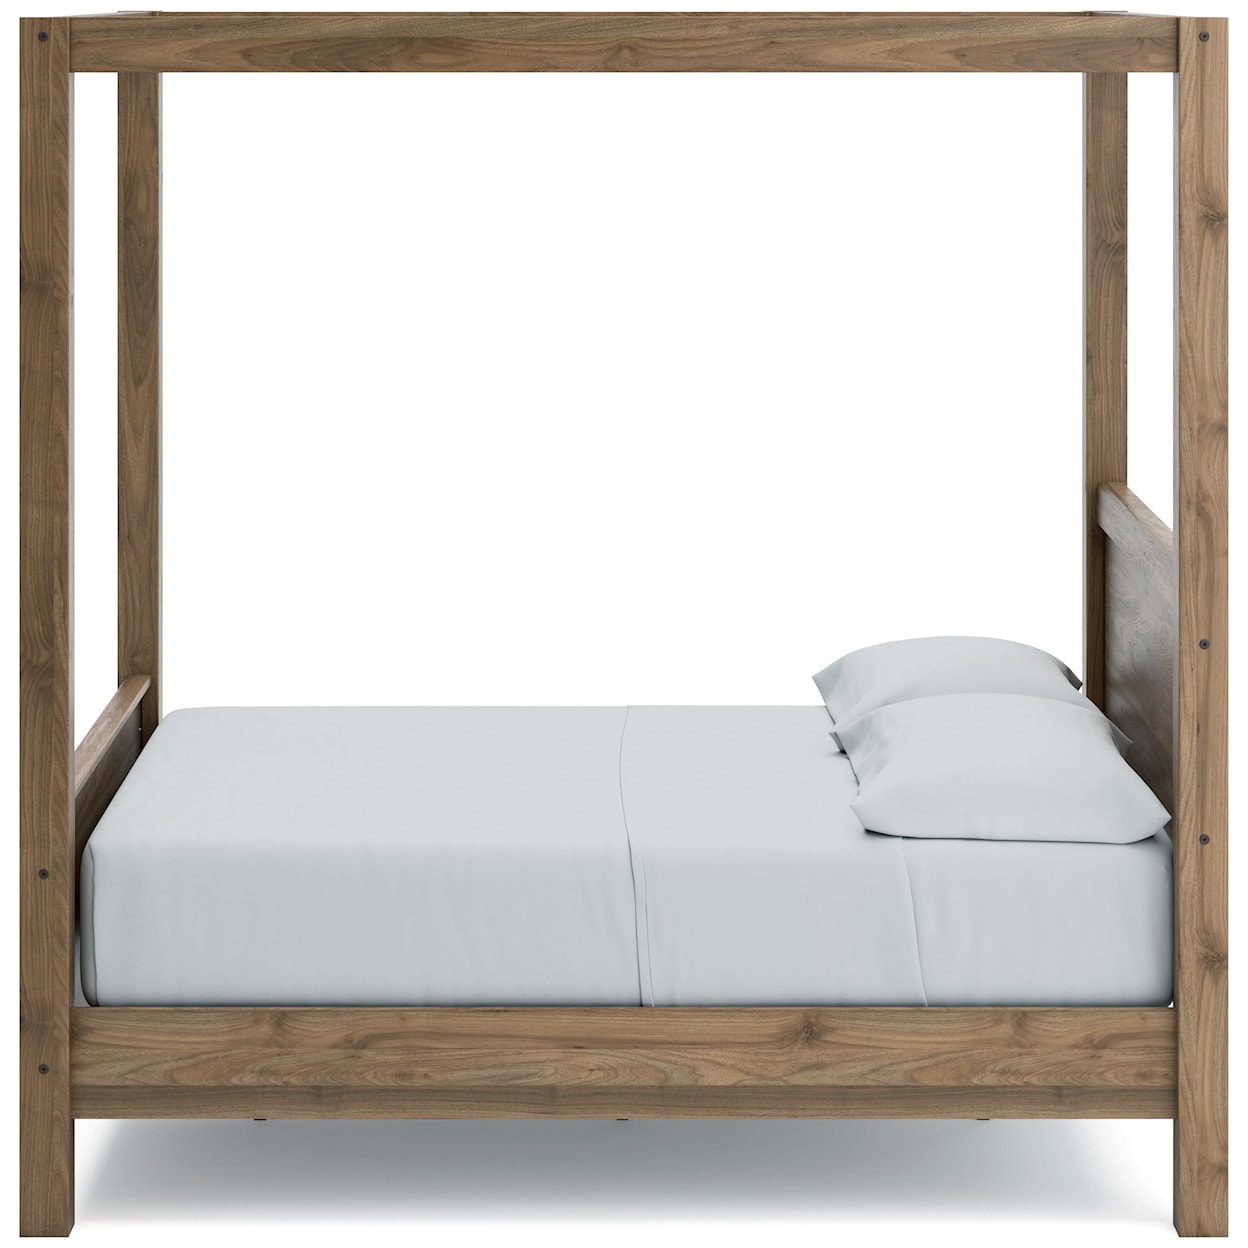 Ashley Furniture Signature Design Aprilyn Full Canopy Bed